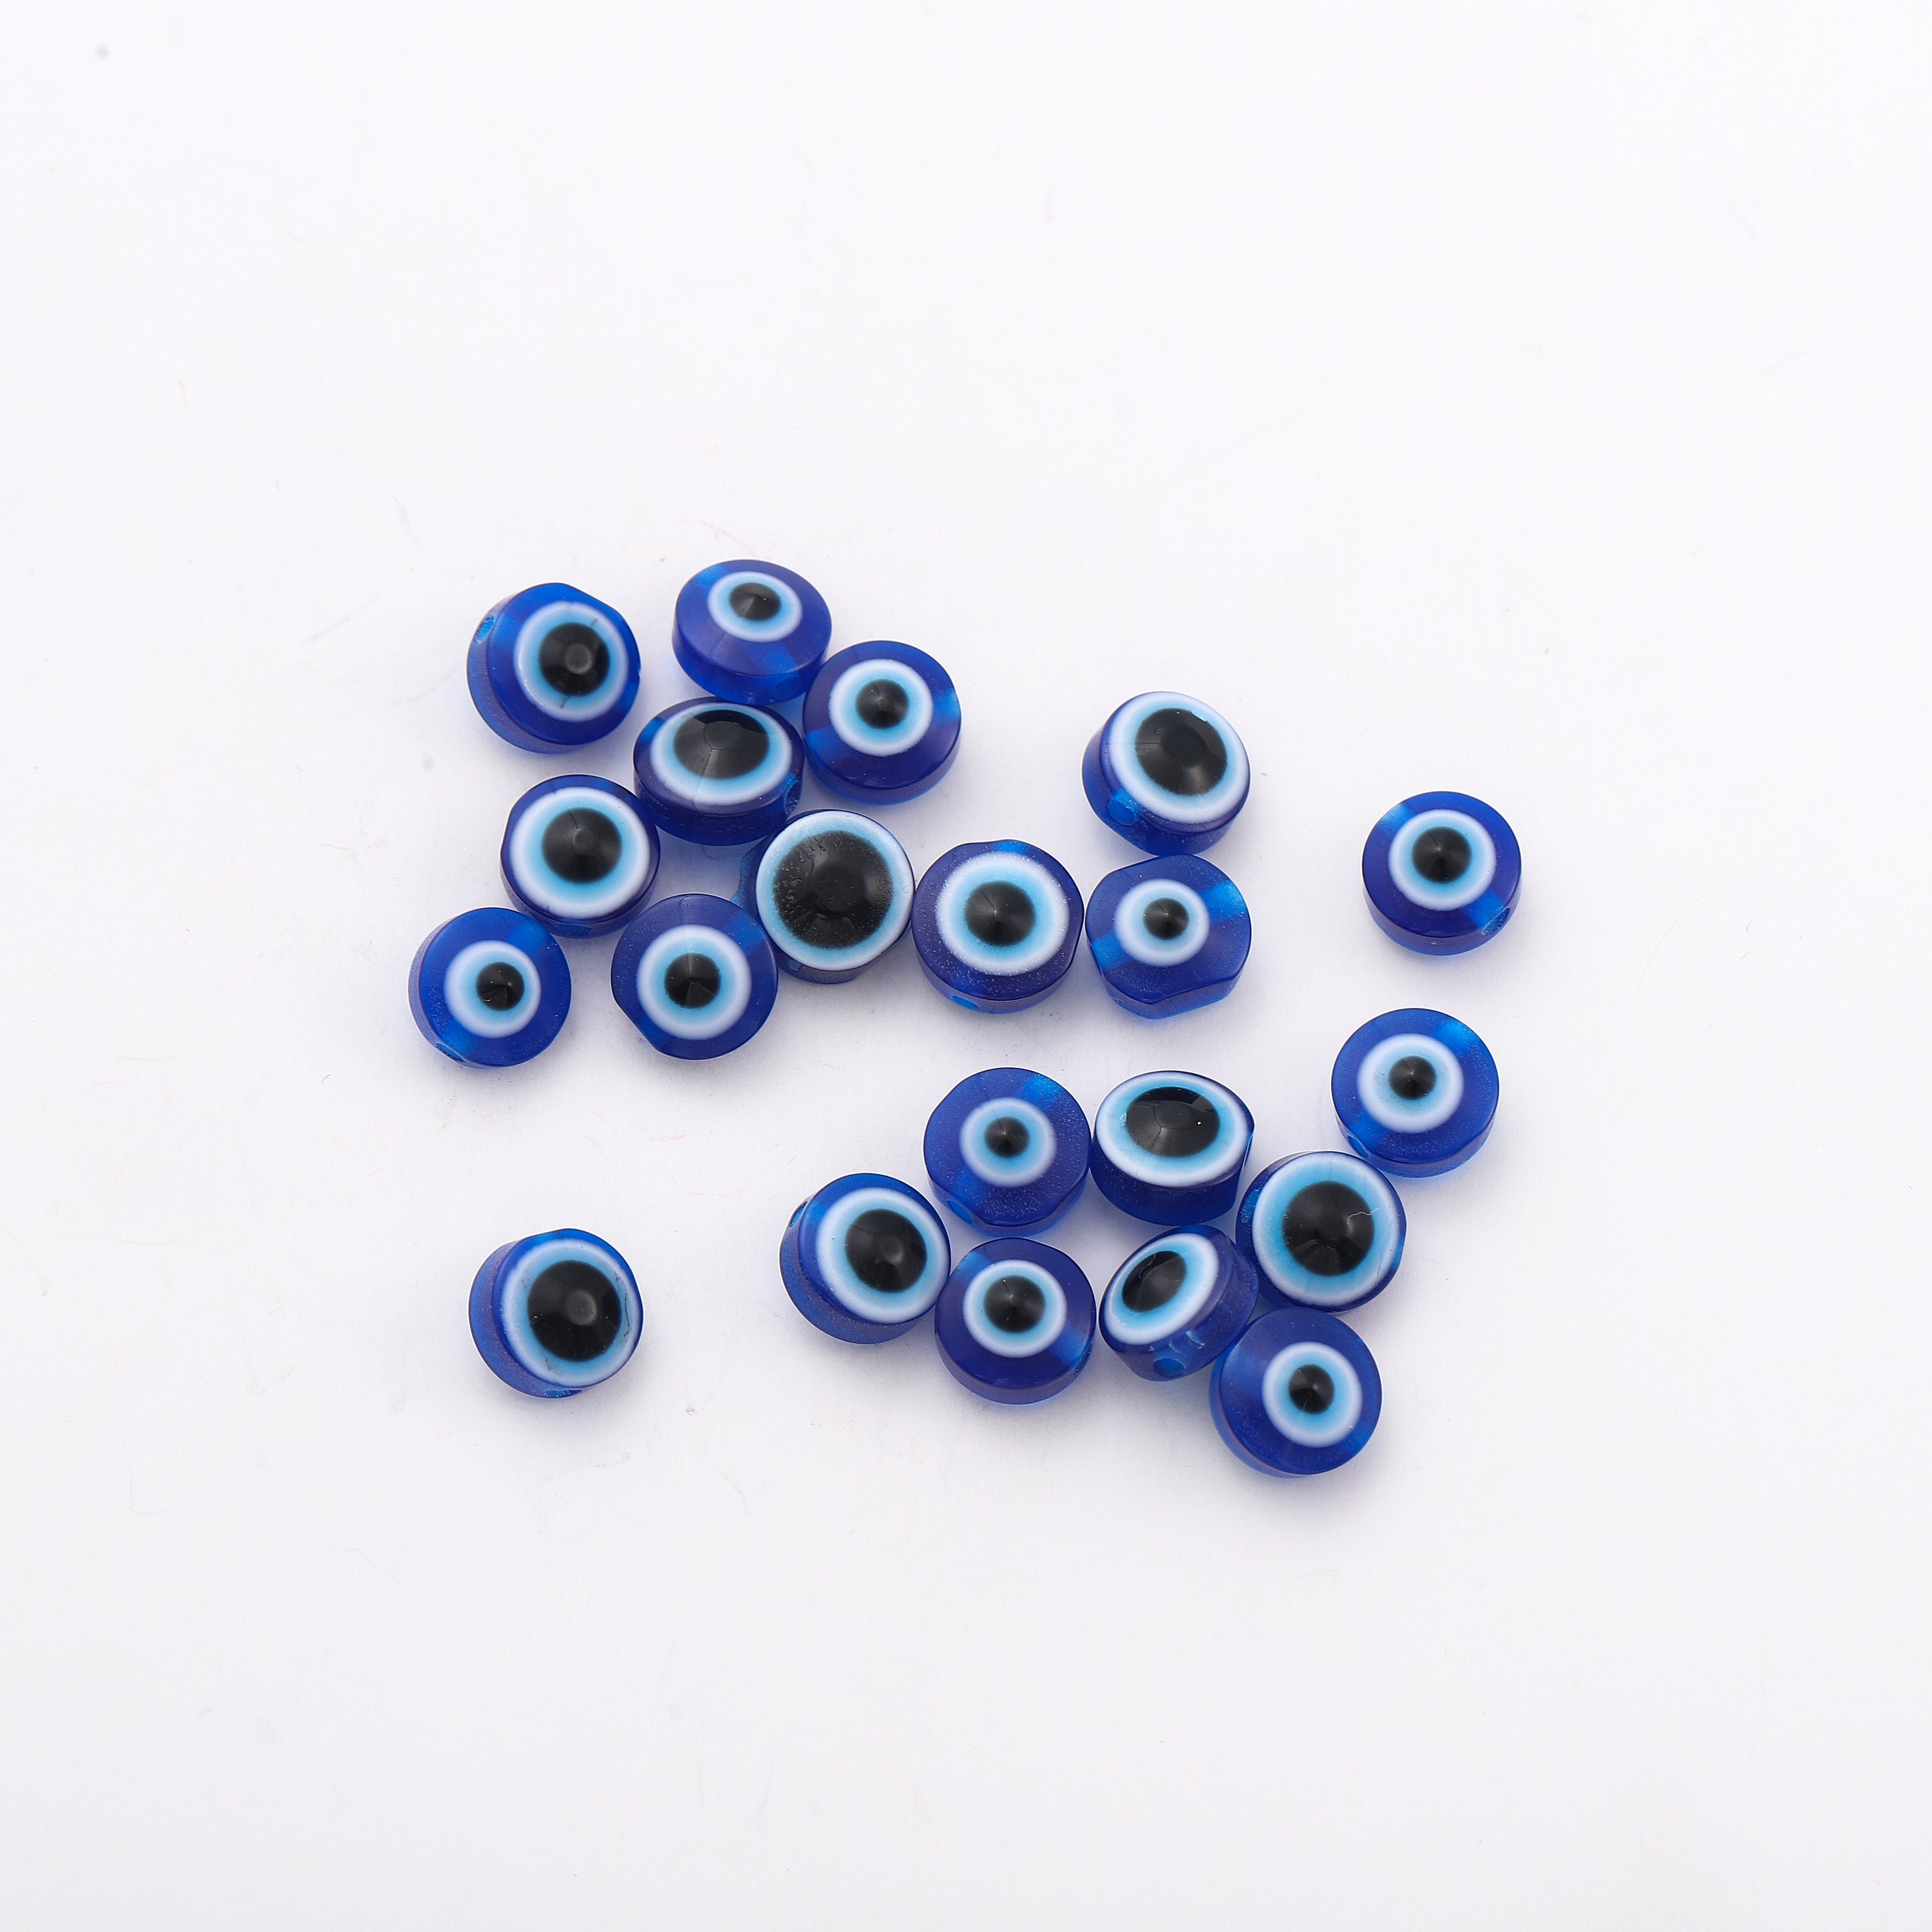 Miuline 450pcs Evil Eye Beads,6mm Flat Round Eye Bracelet Beads 15